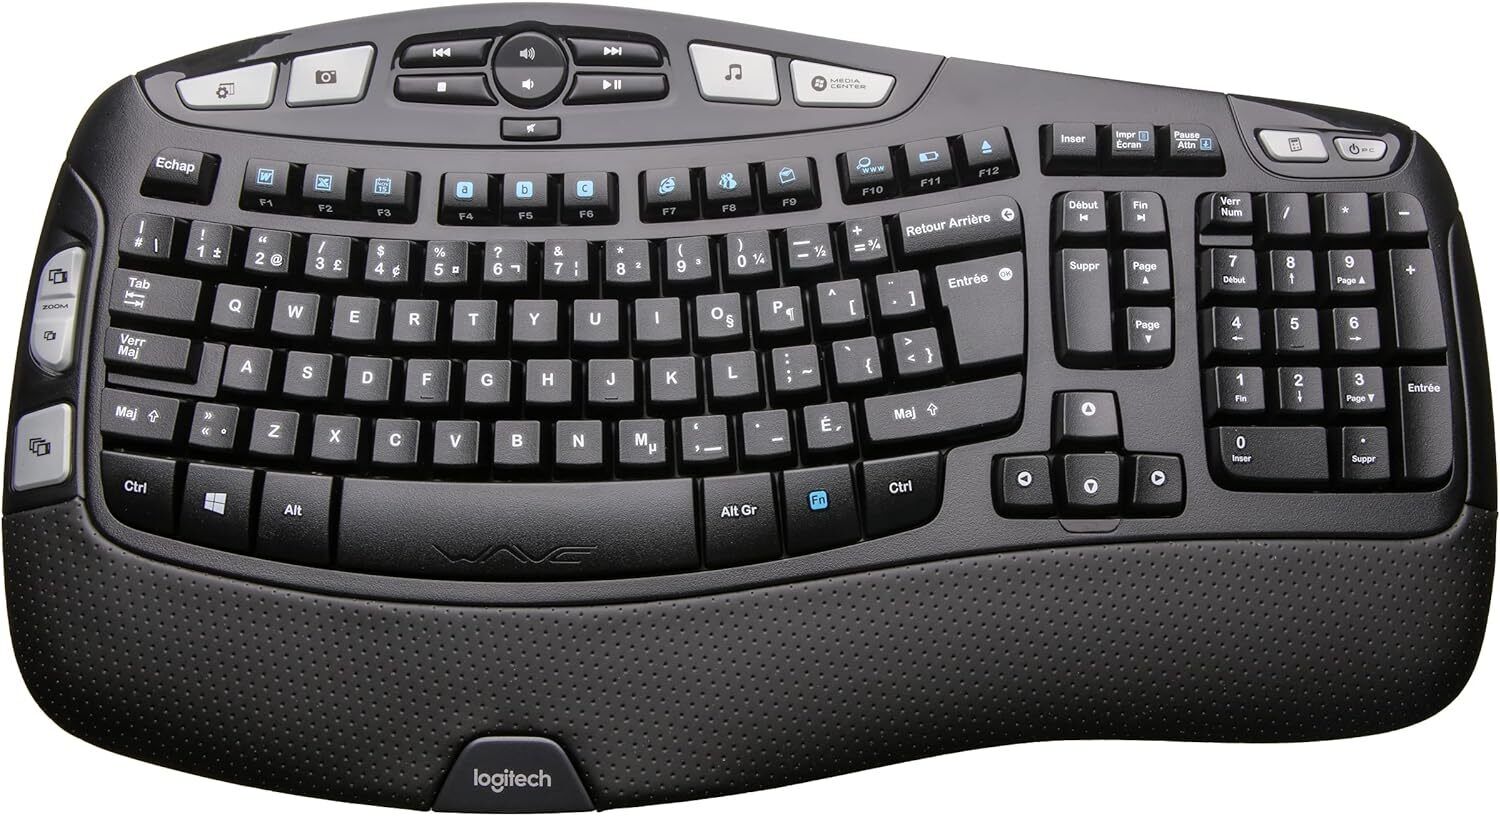 Logitech MK550 Wireless Keyboard and Mouse Combo, French Layout - Black